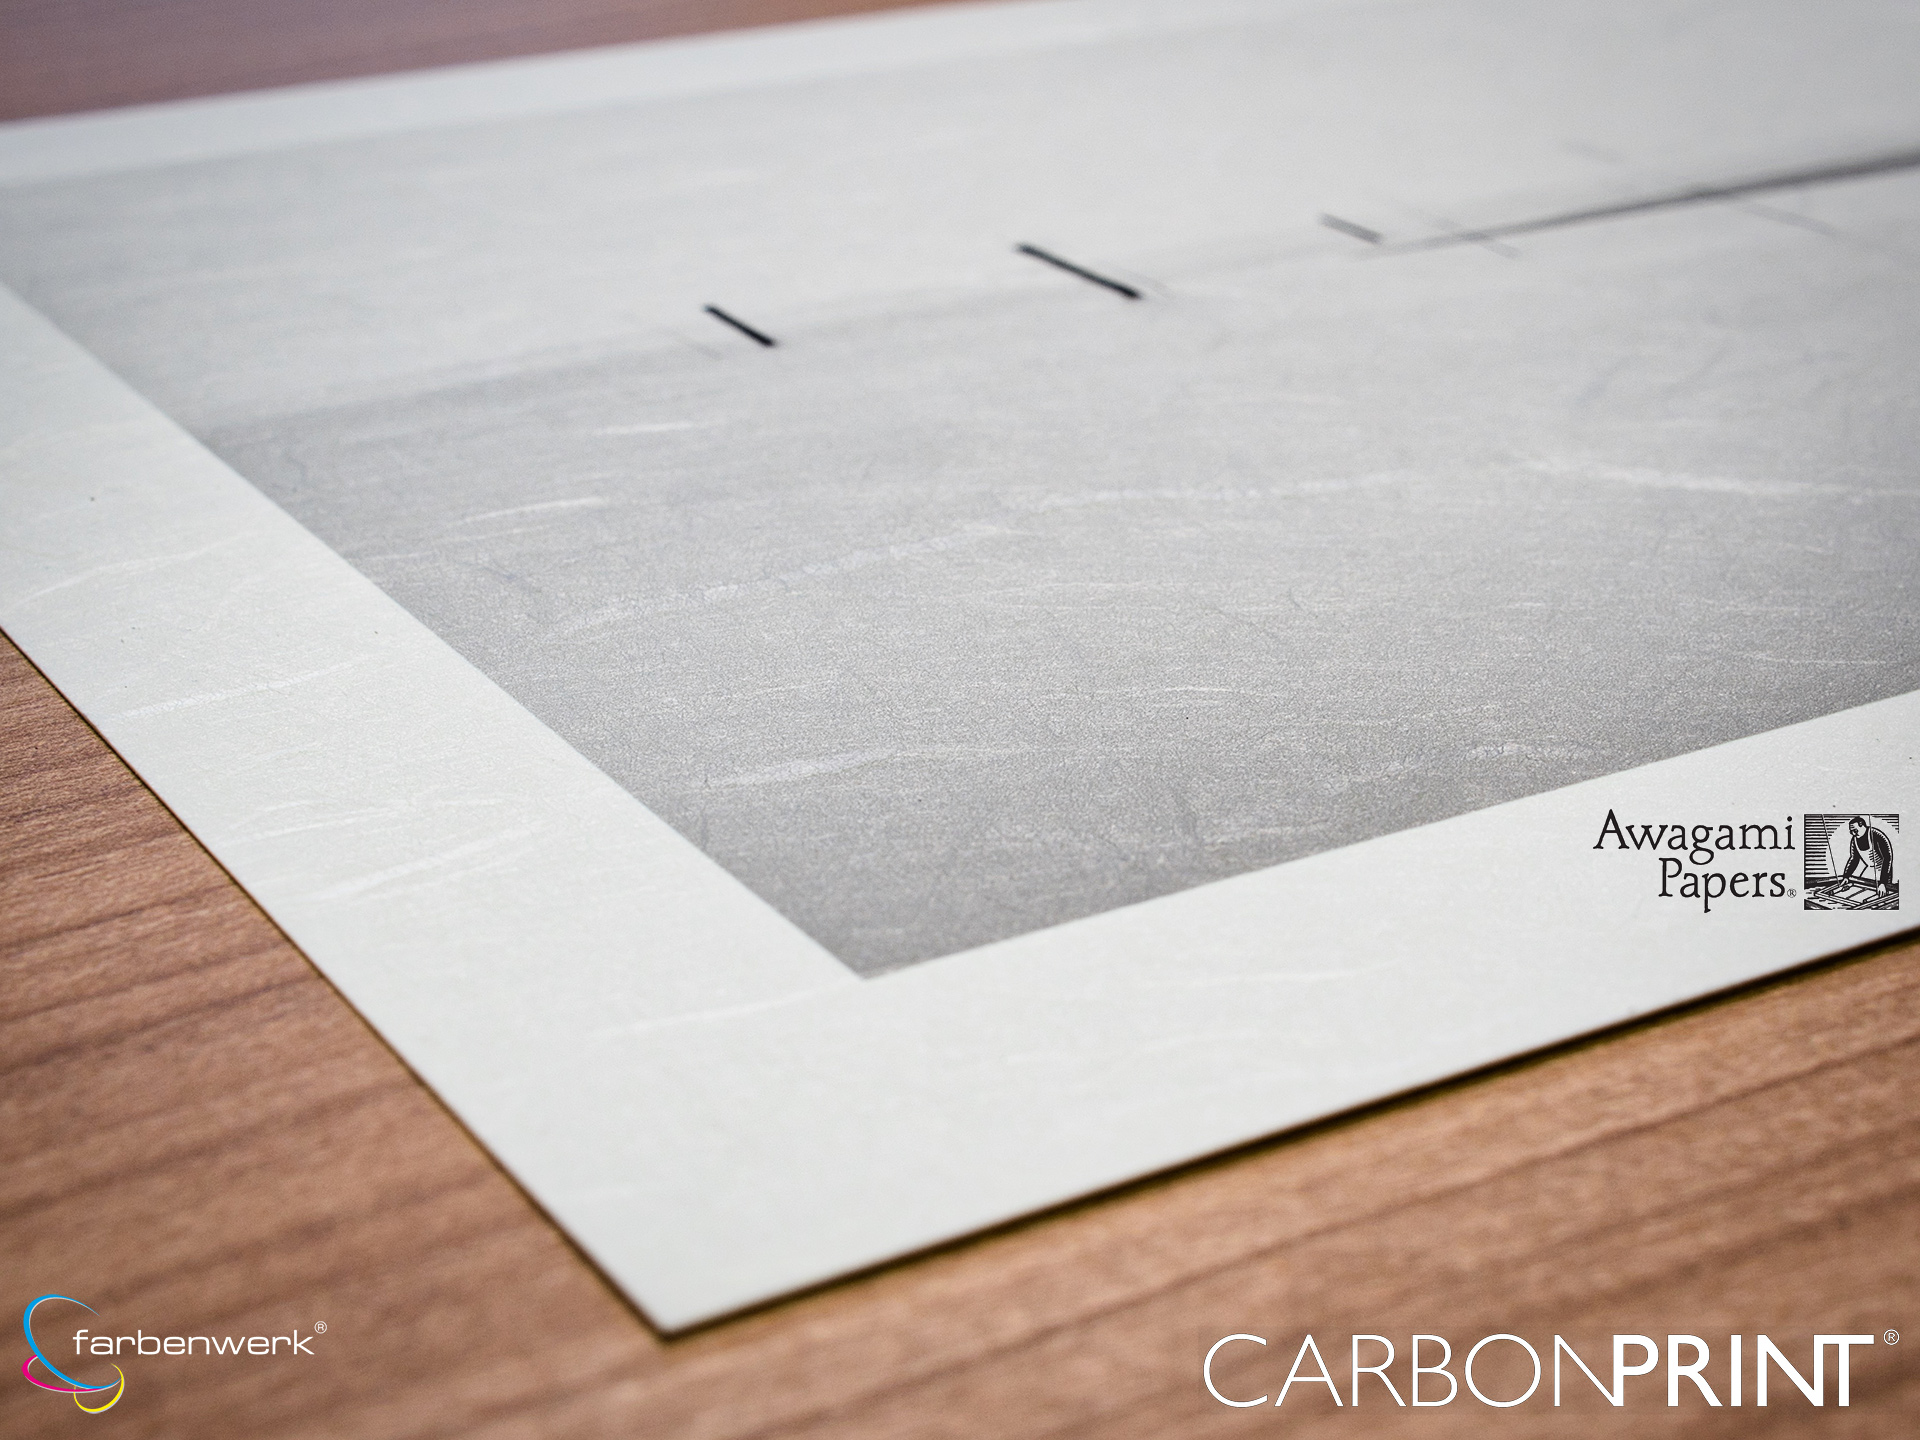 Carbonprint Graphite auf Awagami Unryu